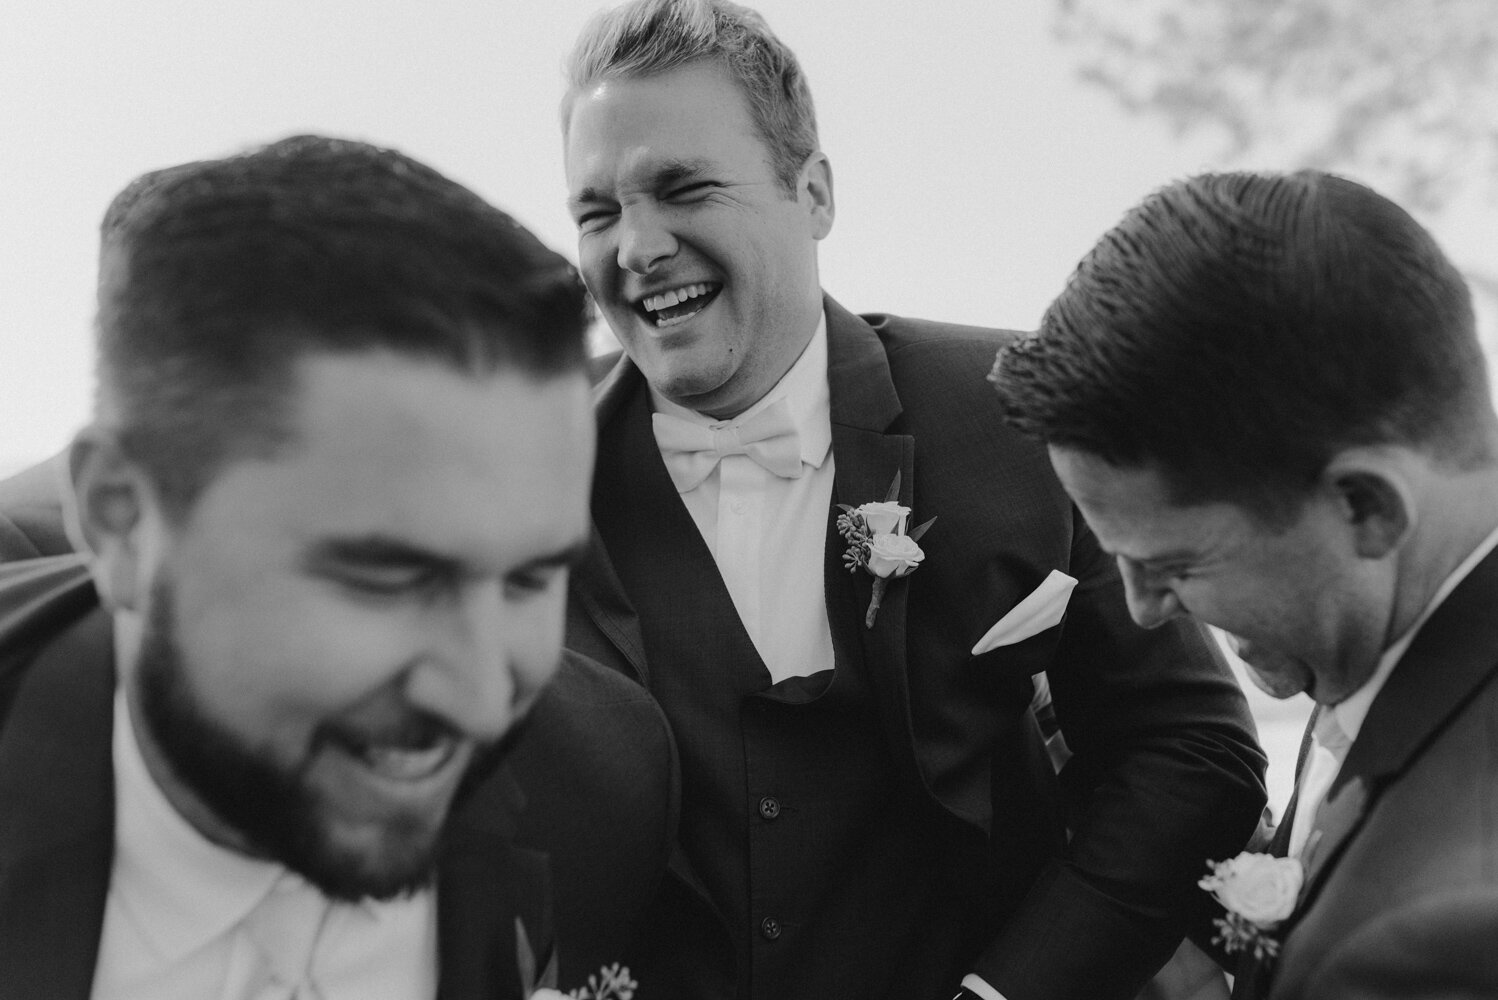 Edgewood Tahoe Wedding, photo of groom and his groomsmen